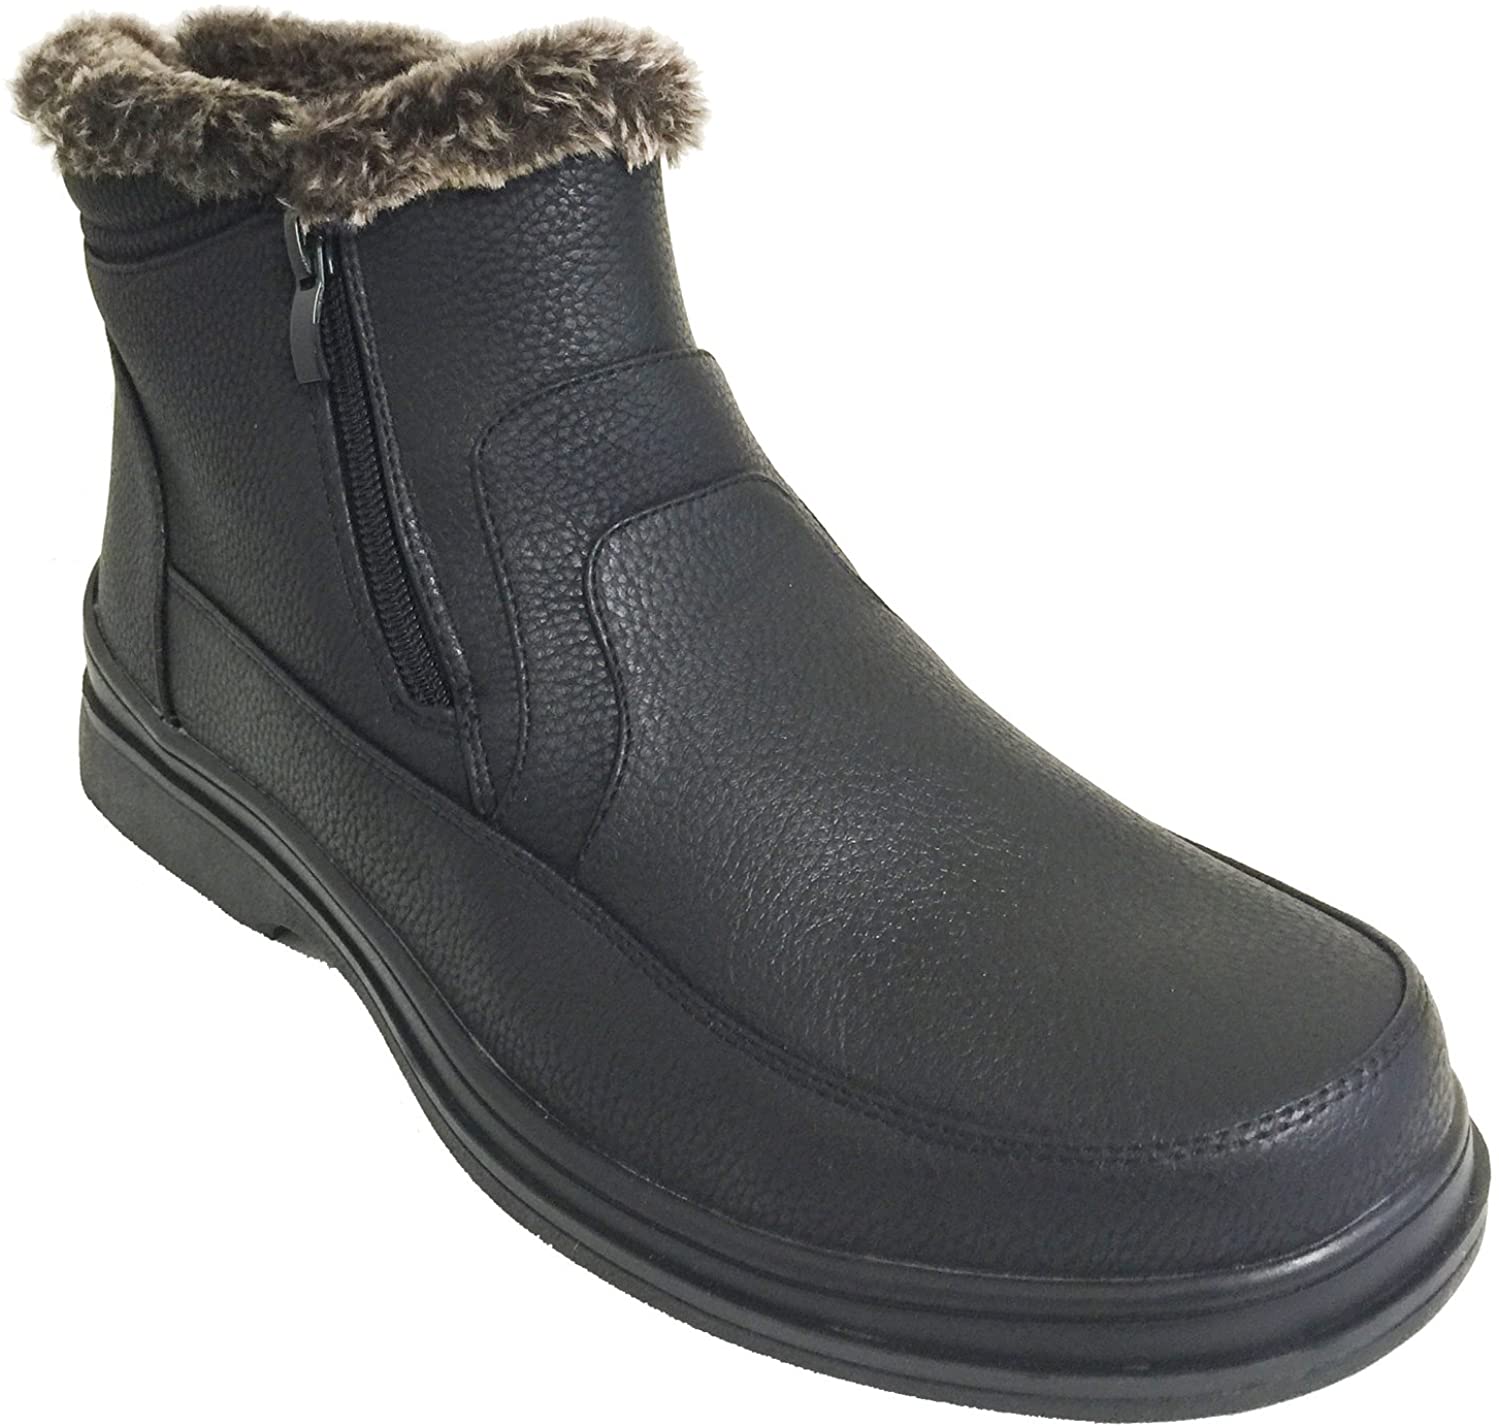 Men's Winter Boots Faux Fur Lined Dual Side Zipper Ankle Snow Comfort Shoes - image 1 of 7